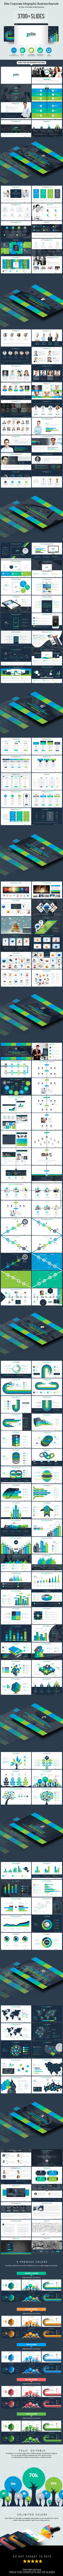 Elite | Multipurpose Business Infographic Keynote